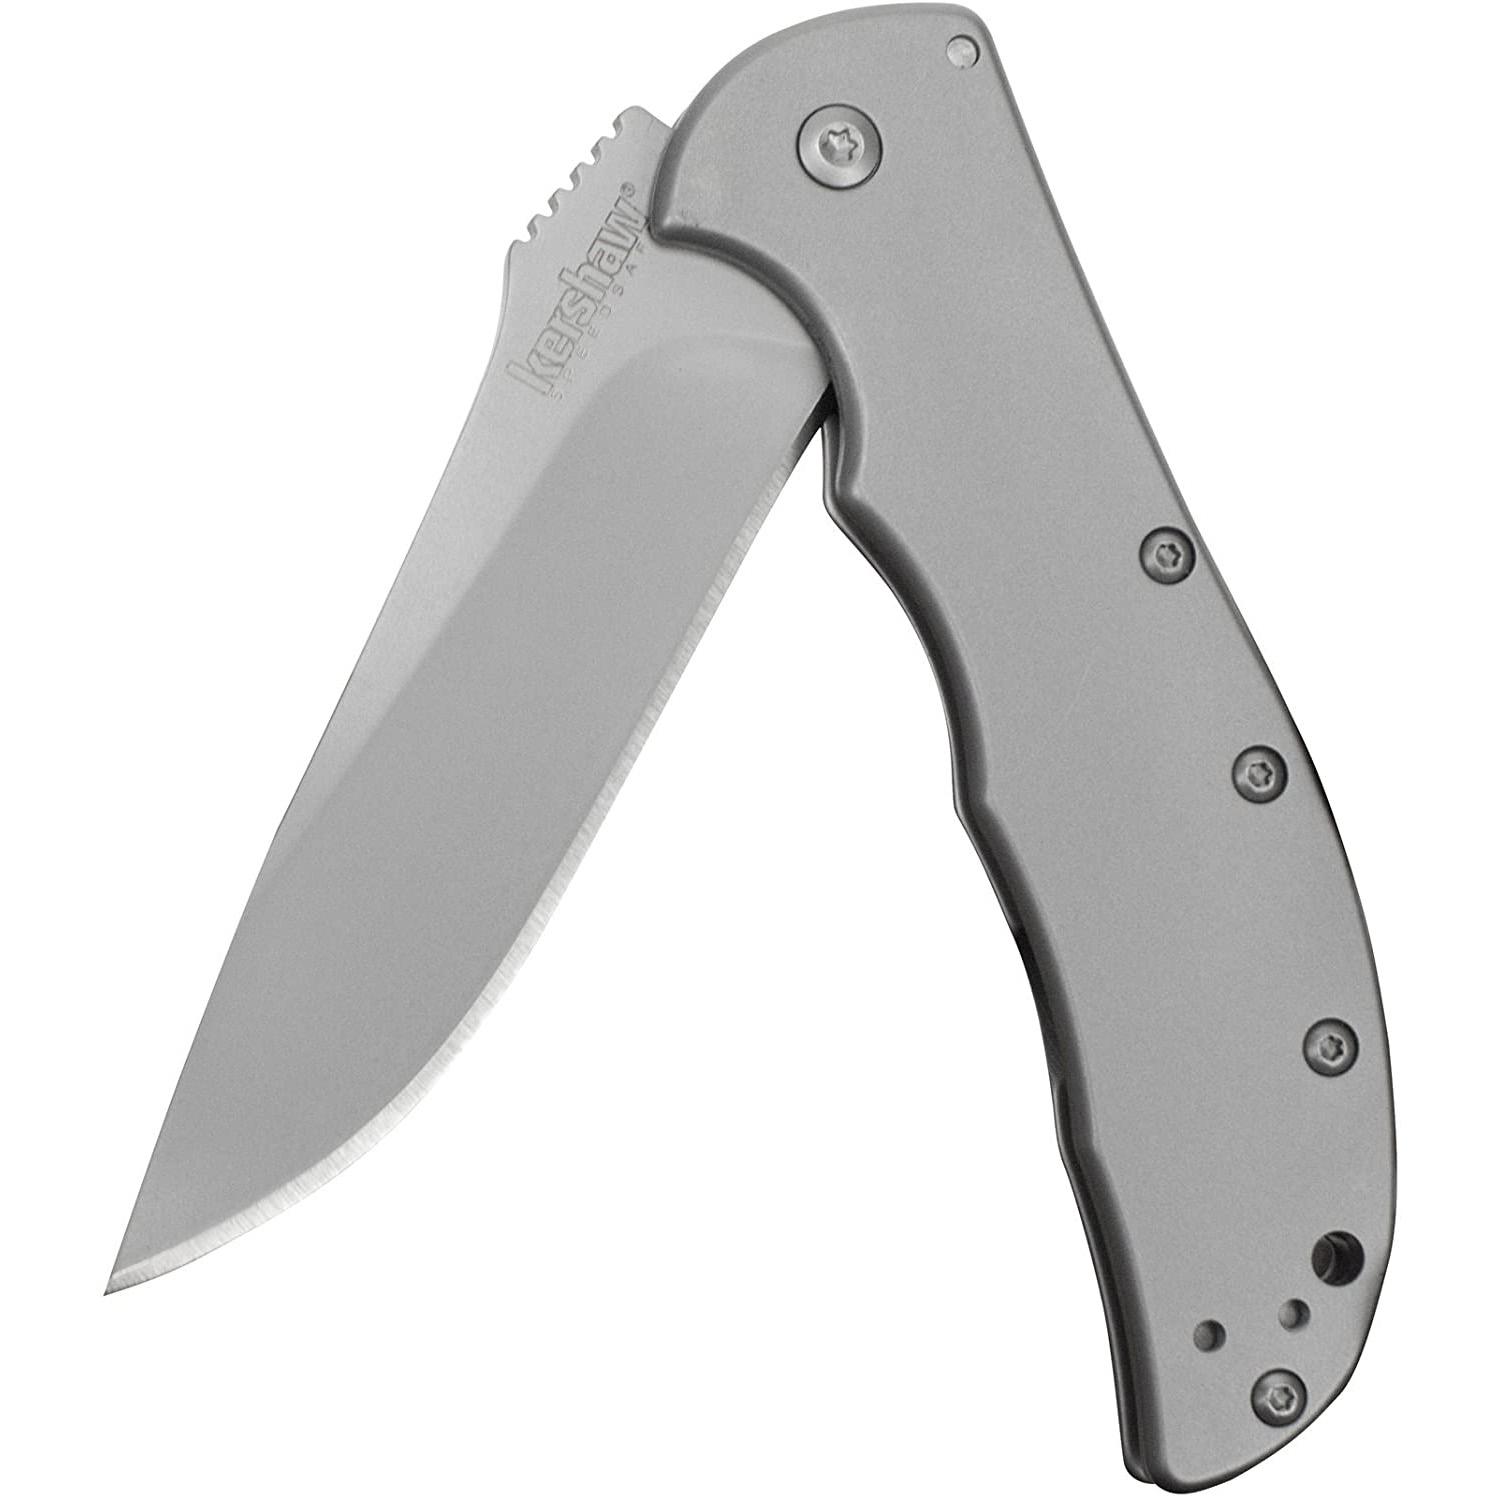 Kershaw Volt 3655 Stainless Steel Blade Pocket Knife for $17.36